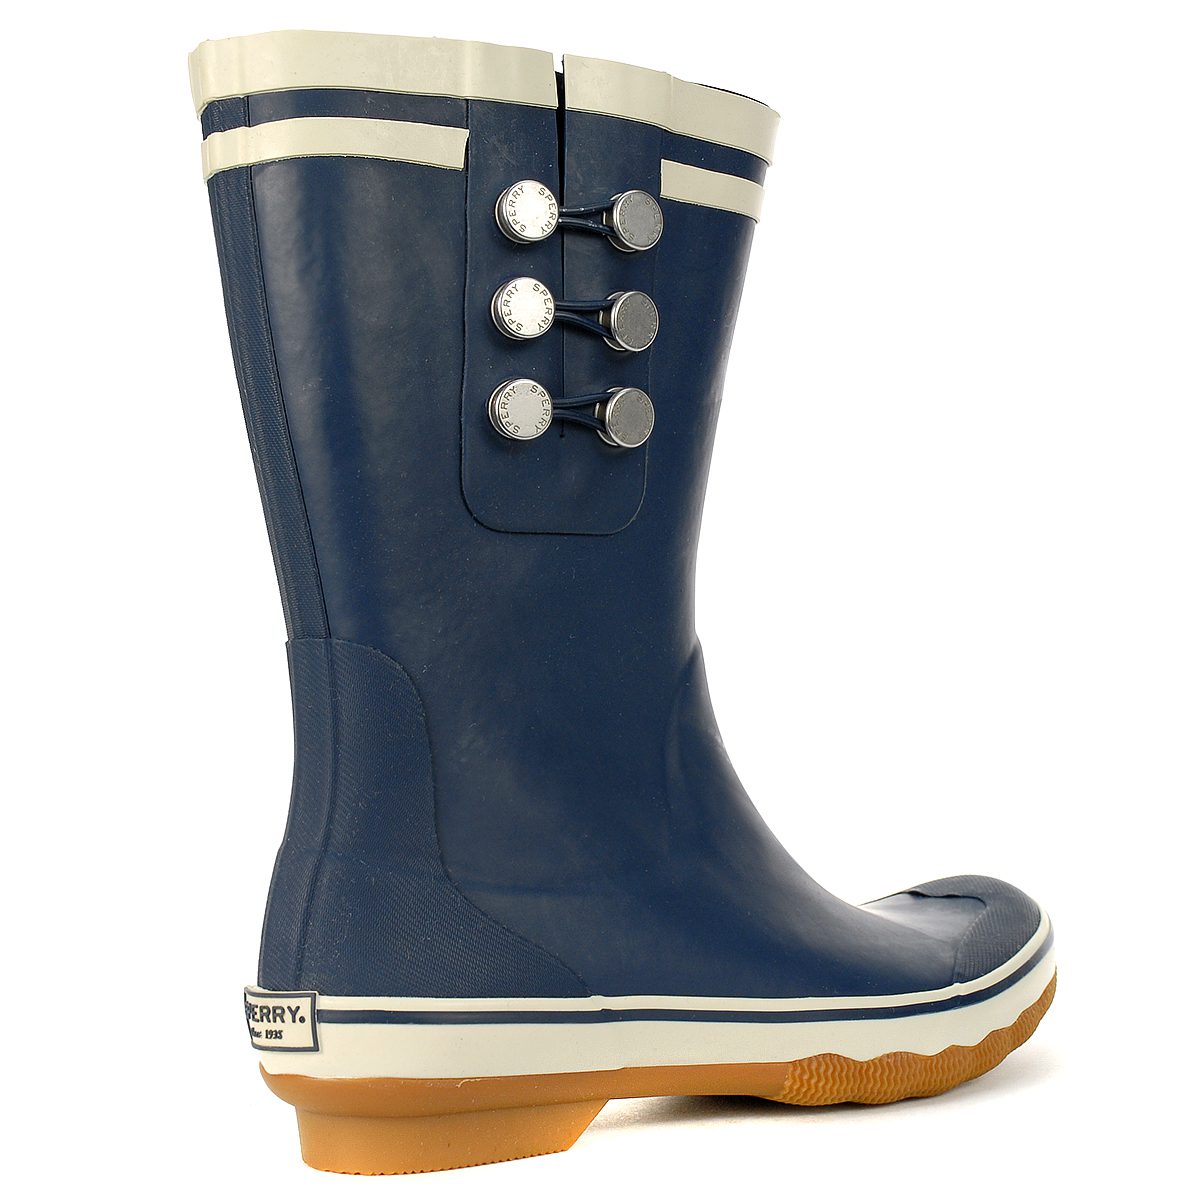 sperry rain boots tall